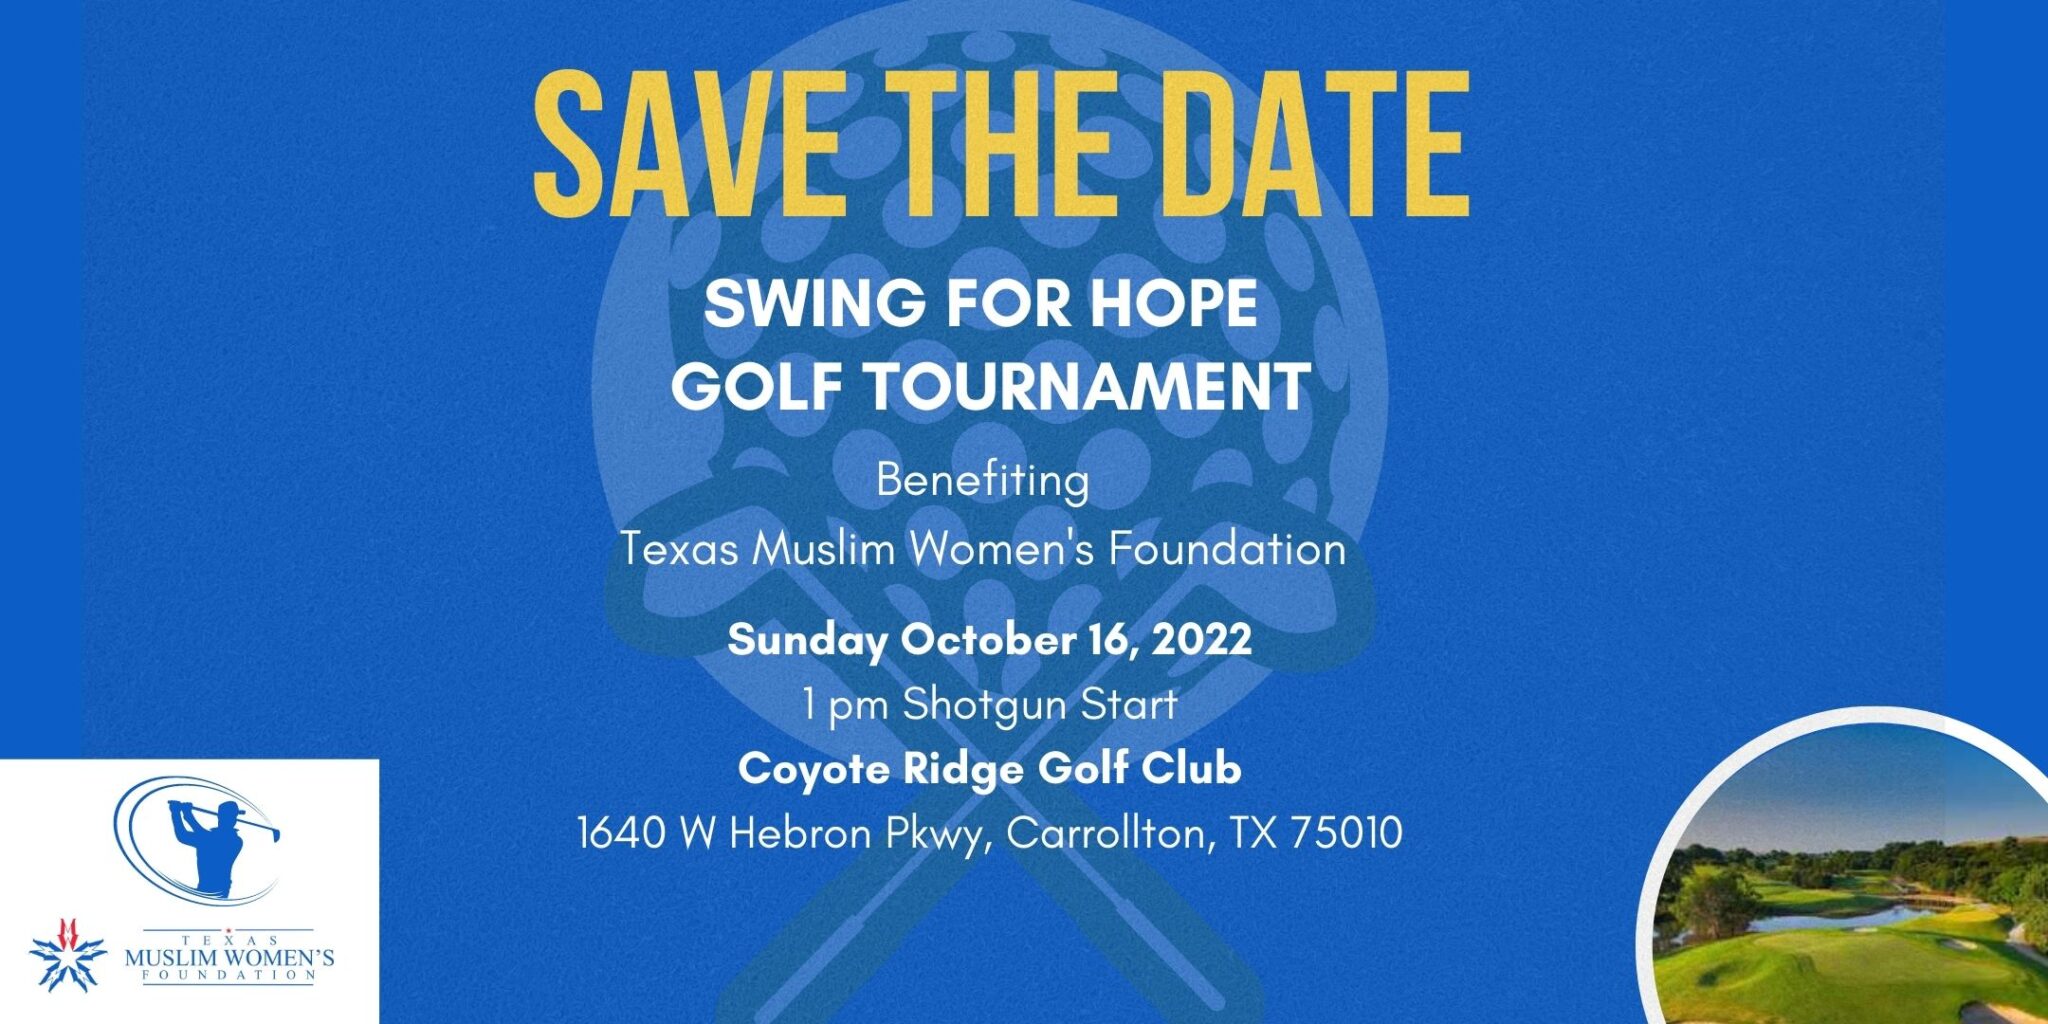 Swing for Hope Golf Tournament2022 Texas Muslim Women's Foundation